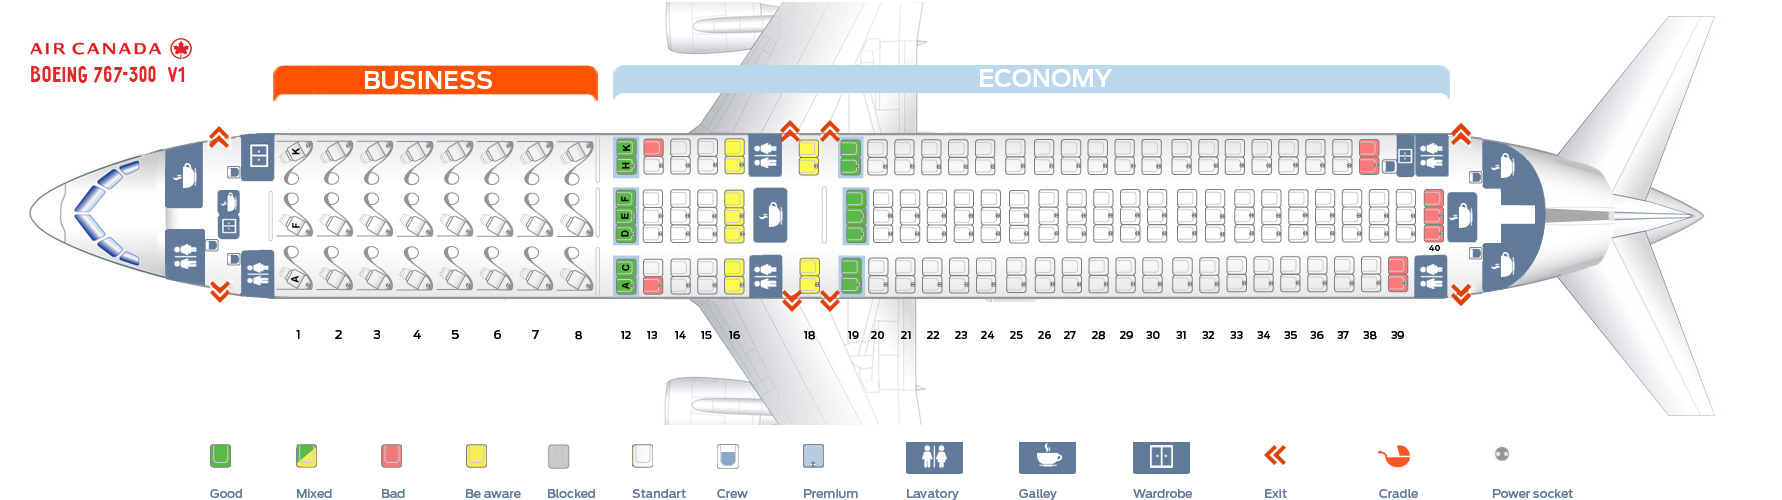 767 Seating Chart